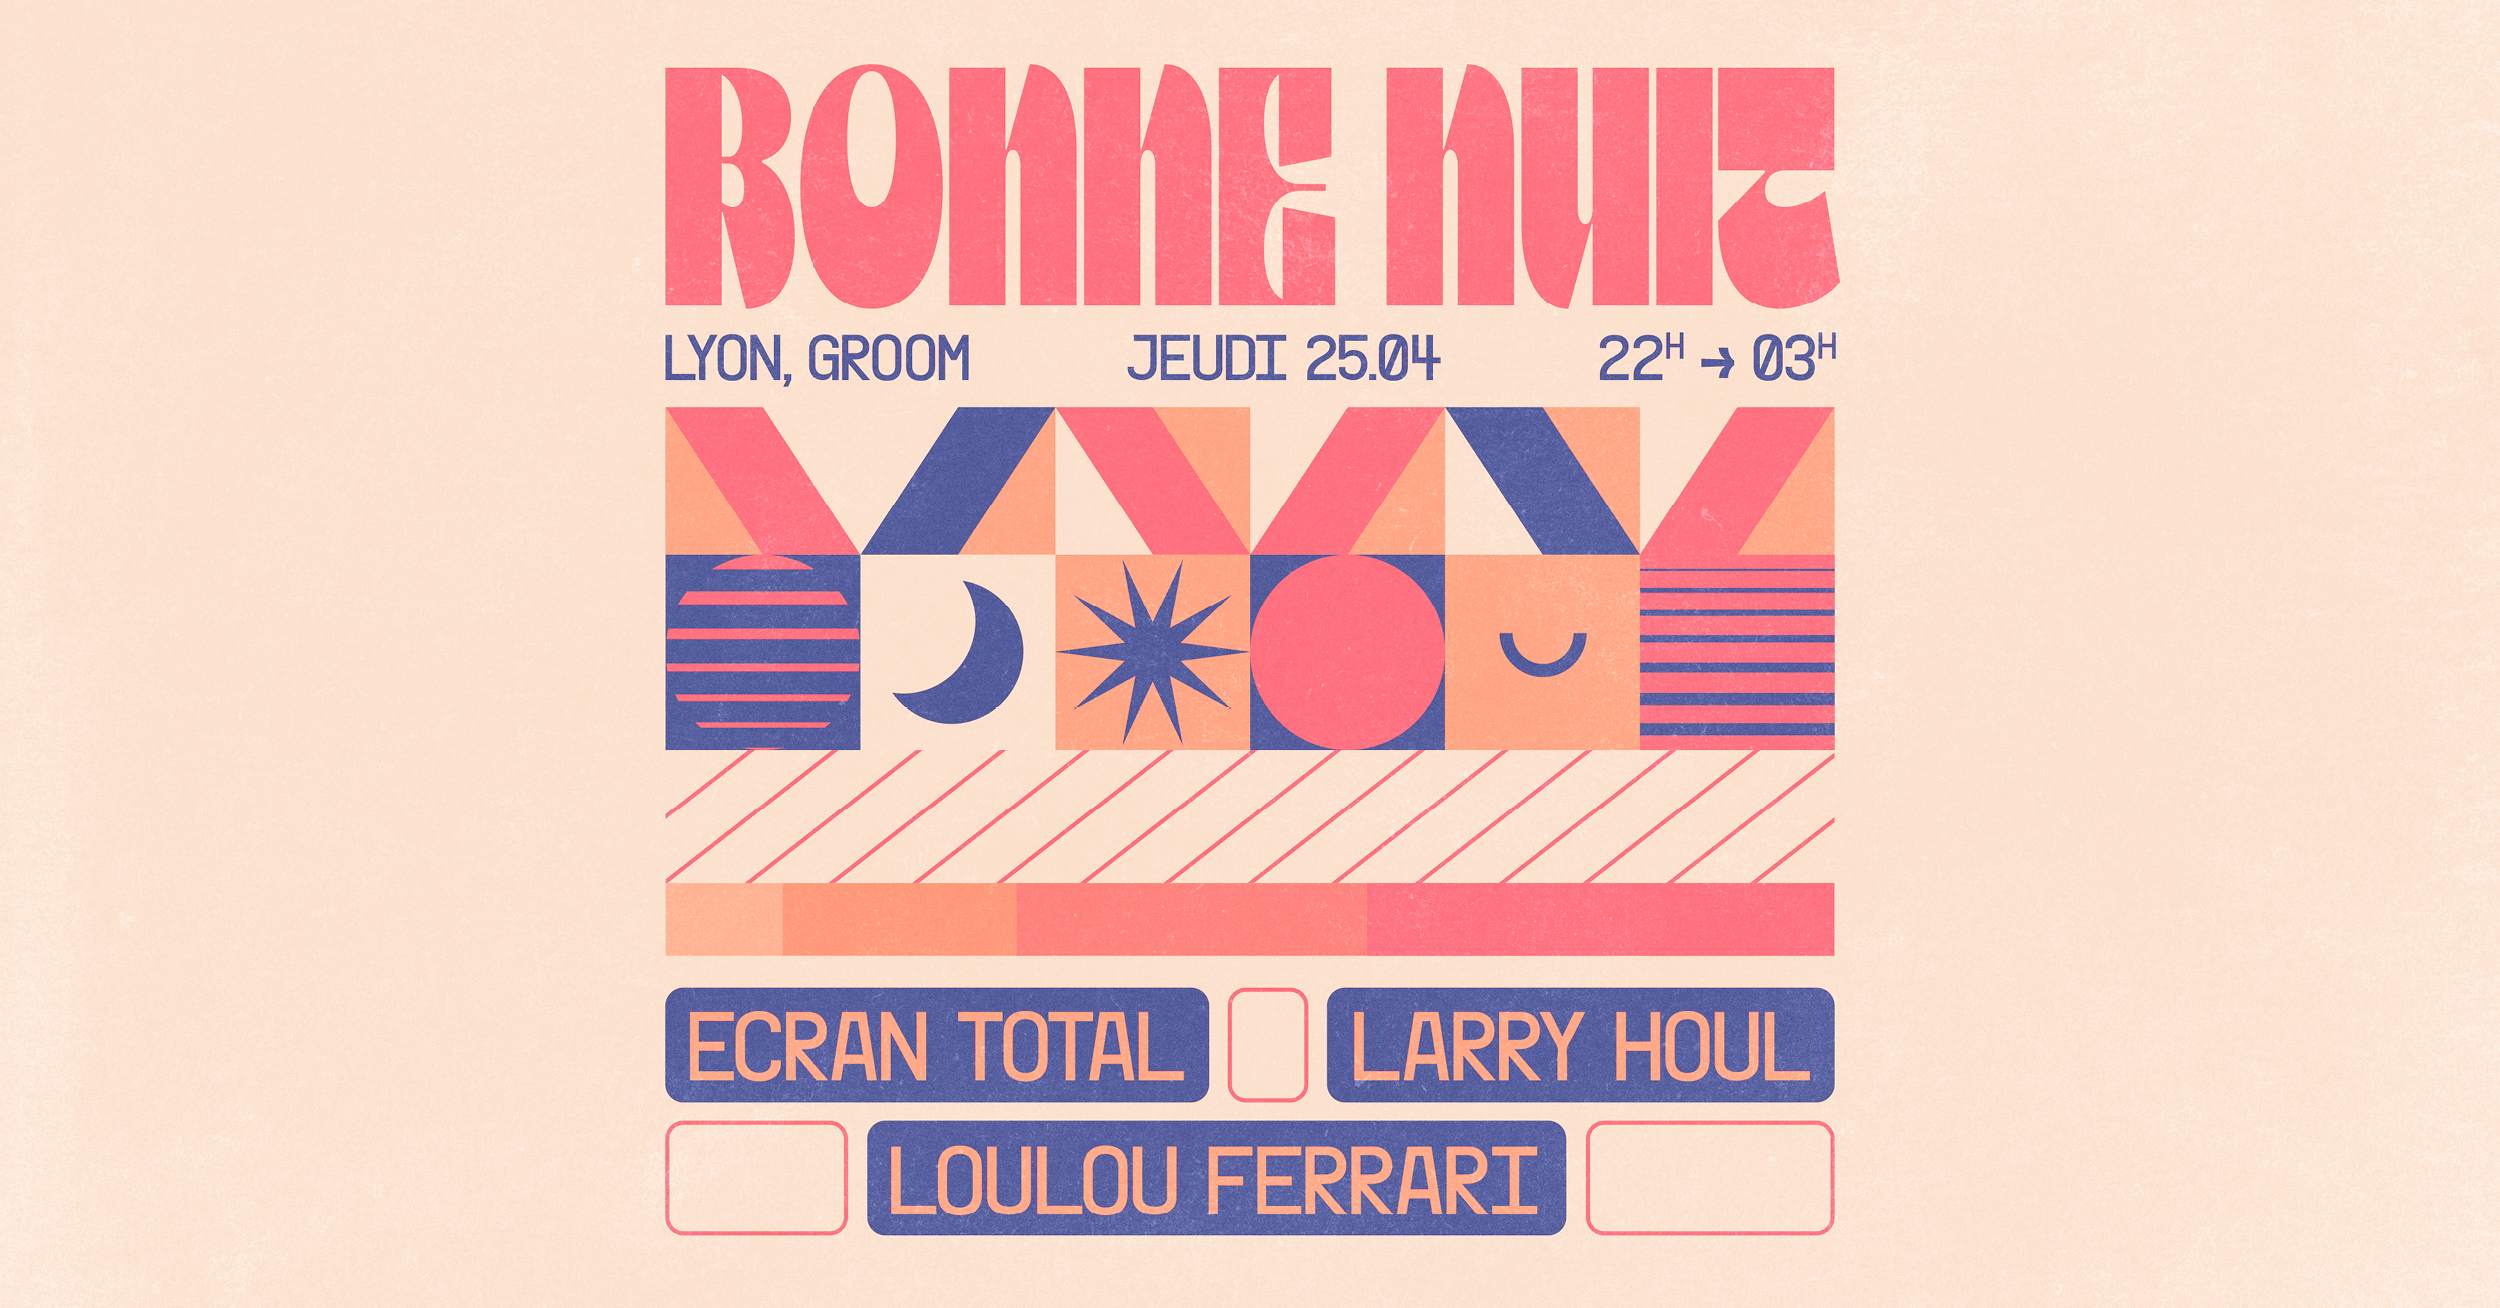 Club Bonne Nuit: Ecran Total - Larry Houl - Loulou Ferrari - フライヤー表